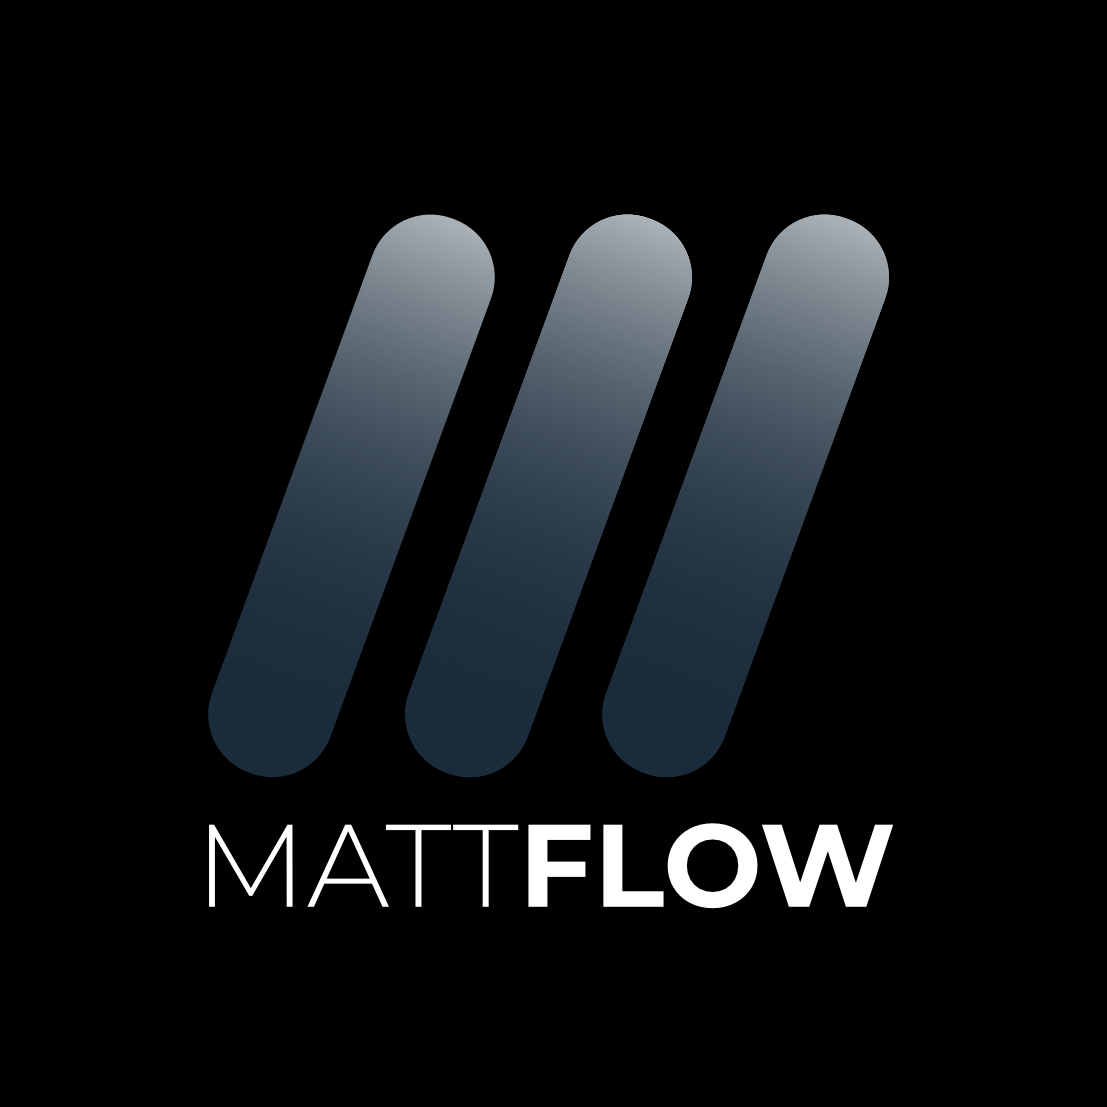 MattFLow